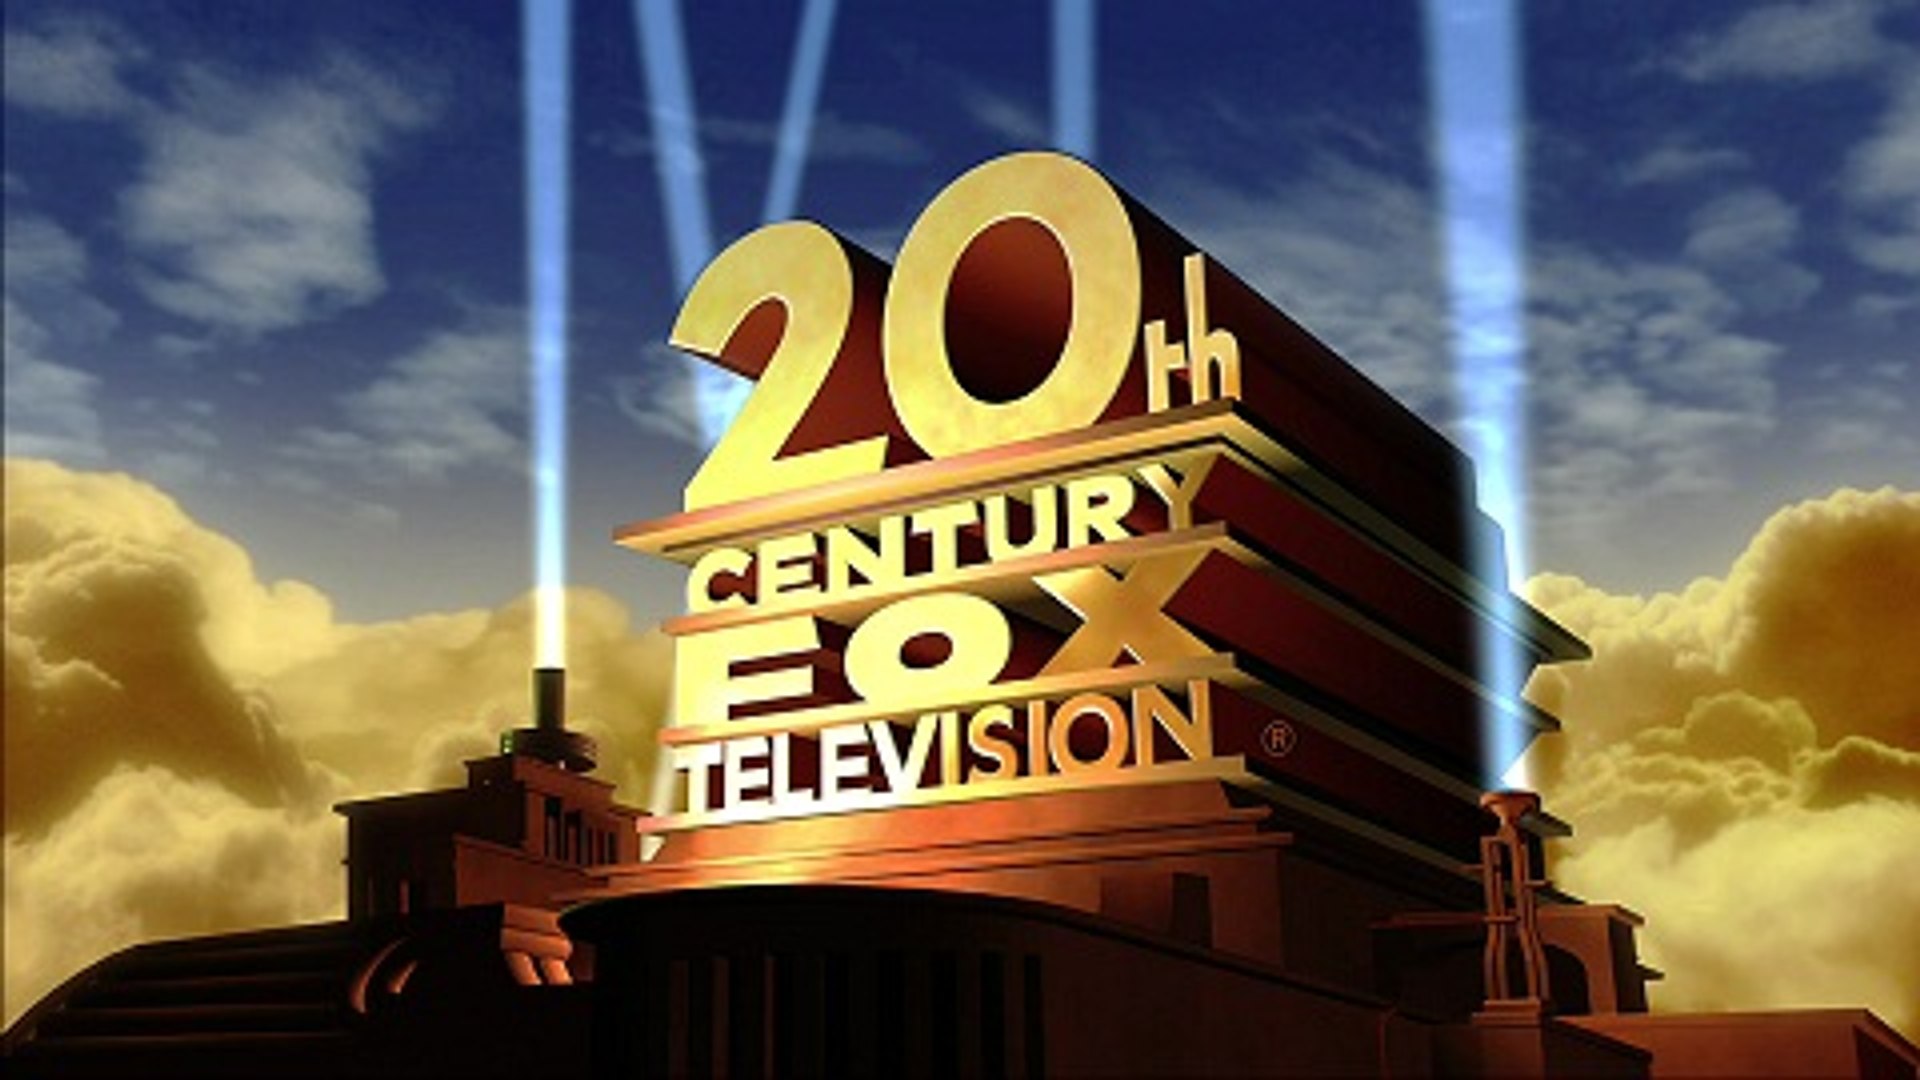 Stream 20th Century Fox Logo History 1914-2015 by Pocco